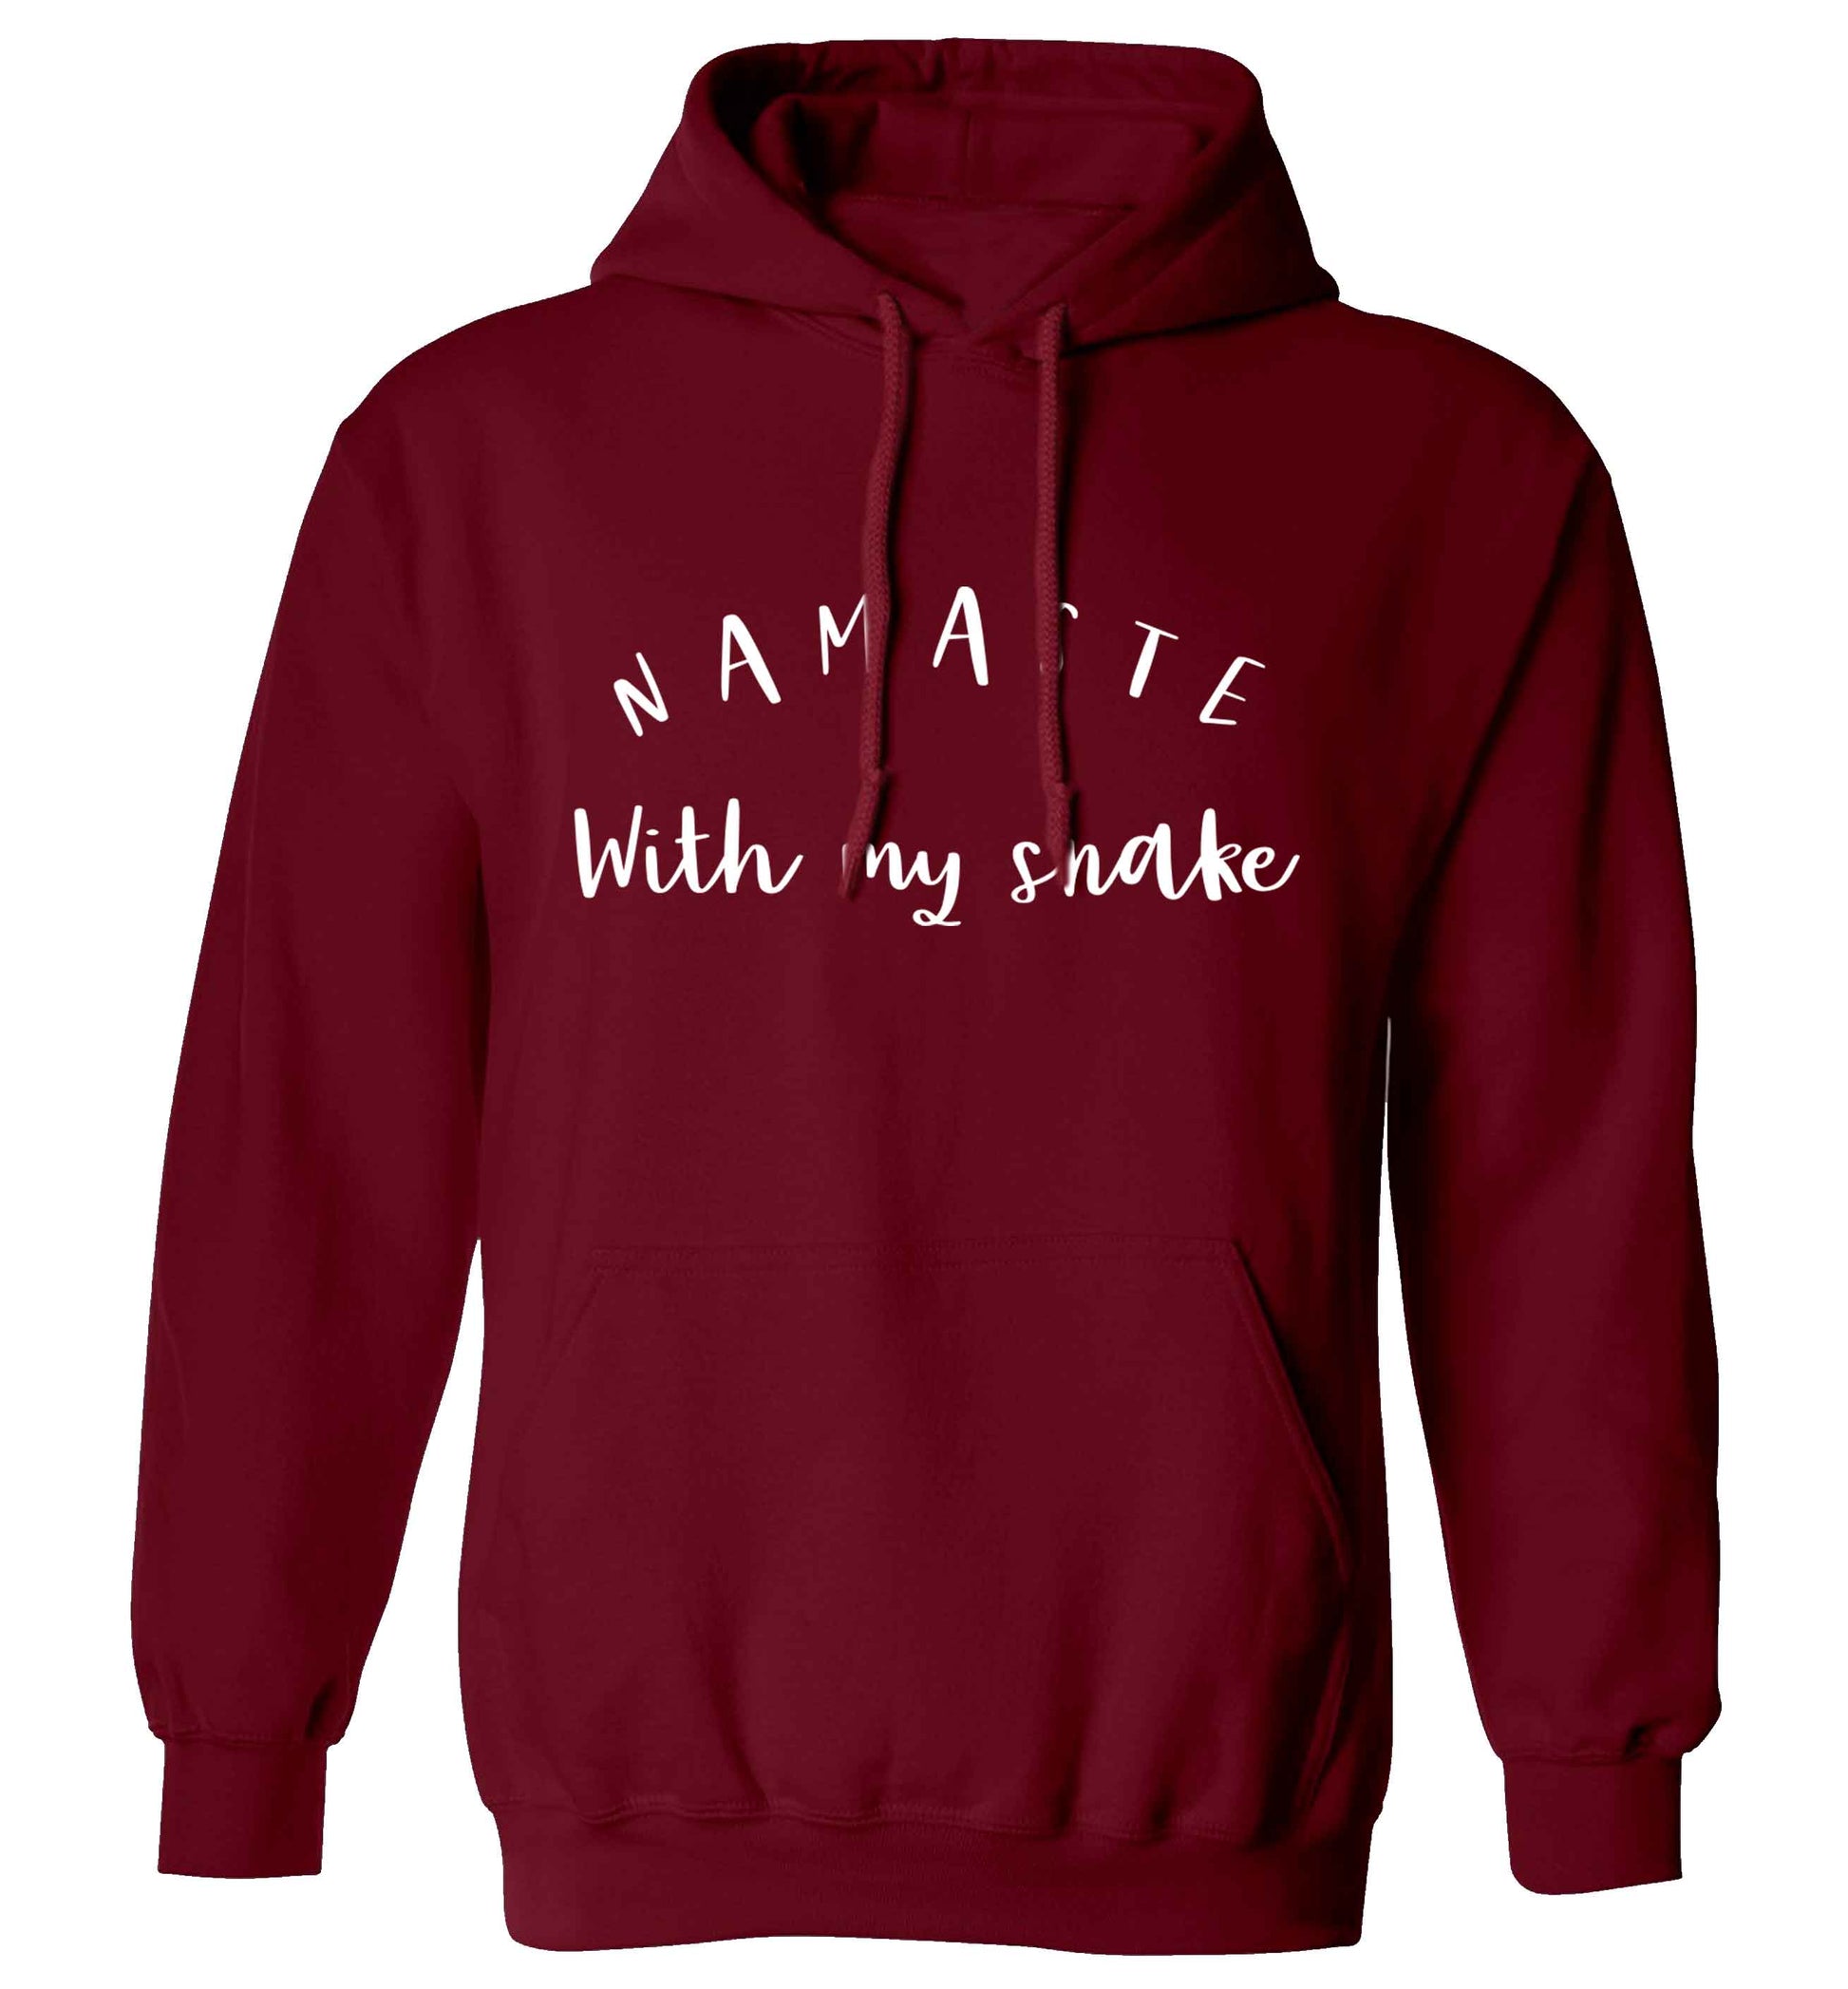 Namaste with my snake adults unisex maroon hoodie 2XL